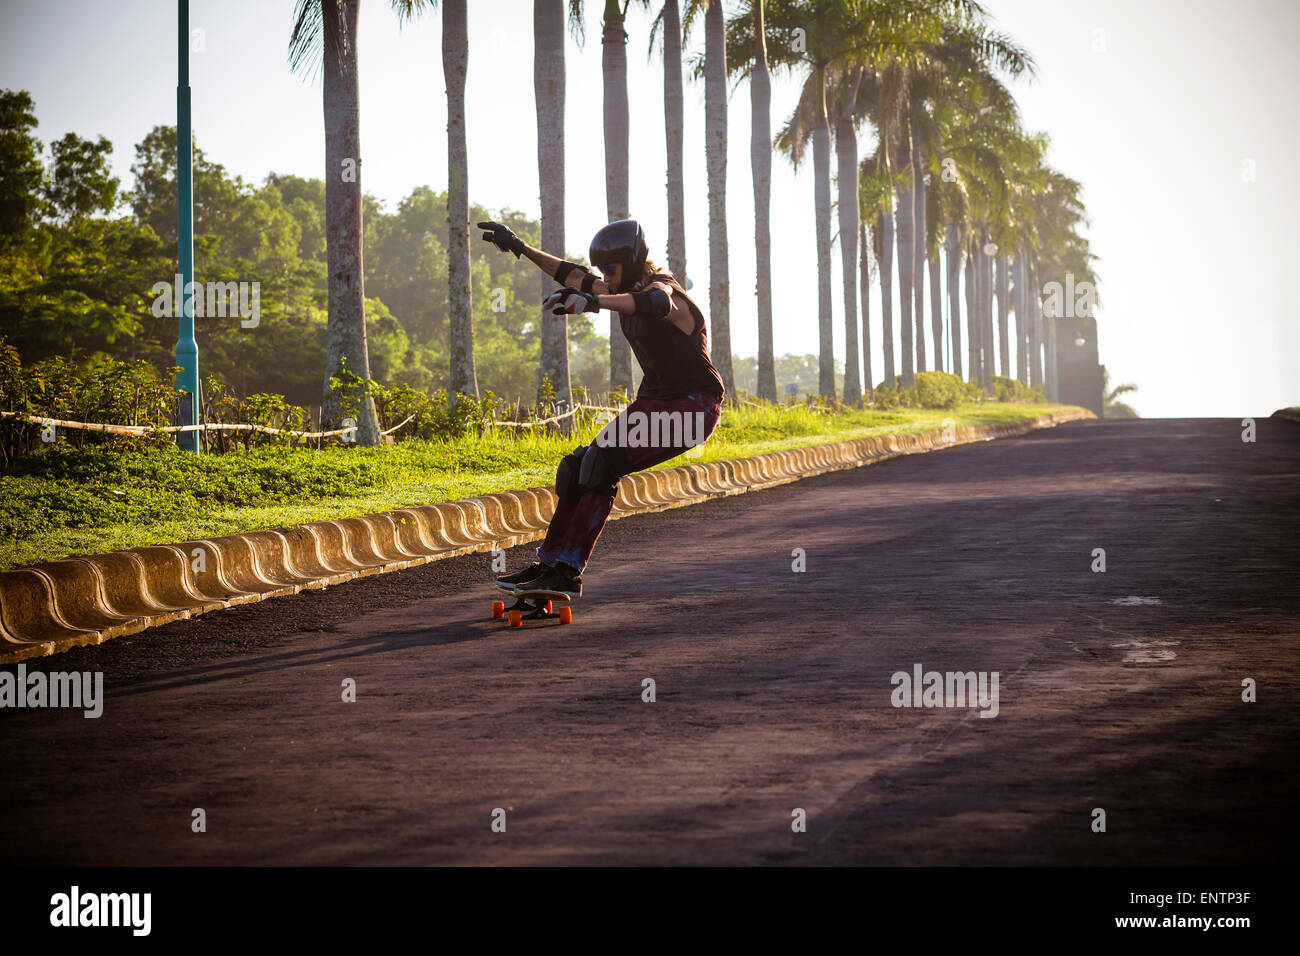 Man riding on a longboard skate, Bali, Indonesia. Stock Photo